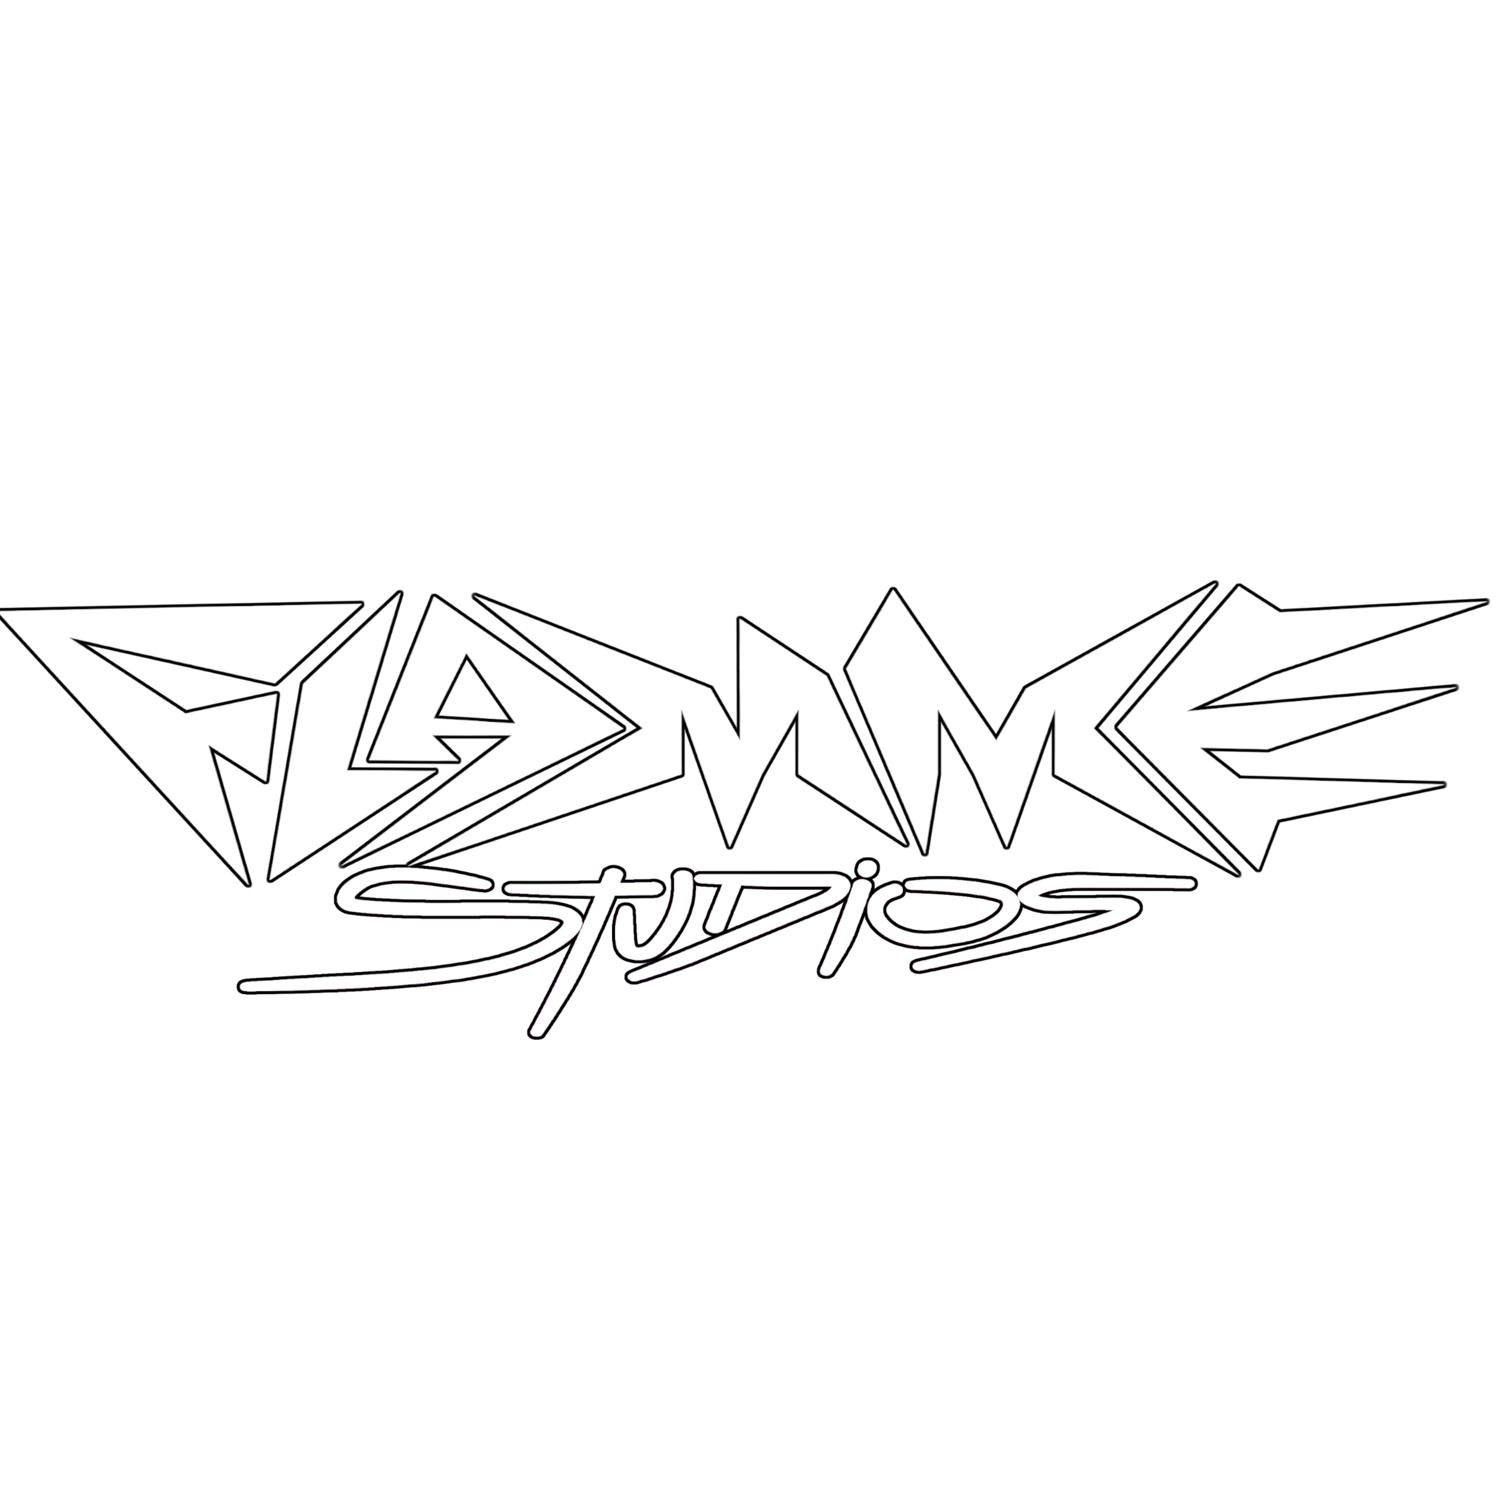 Flamme Studios